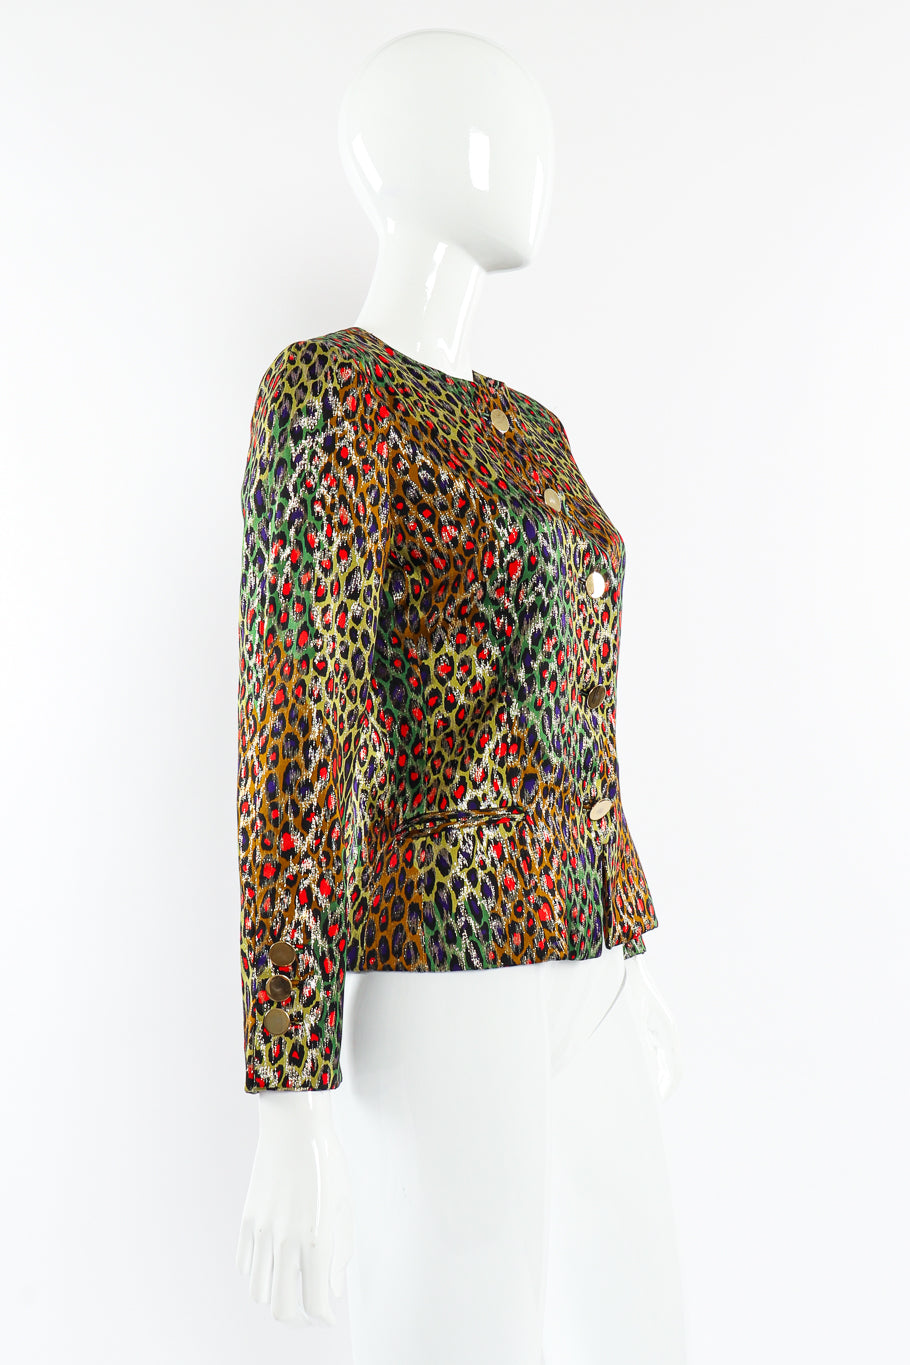 Vintage Bill Blass Leopard Print Silk Jacket side view on mannequin @Recessla